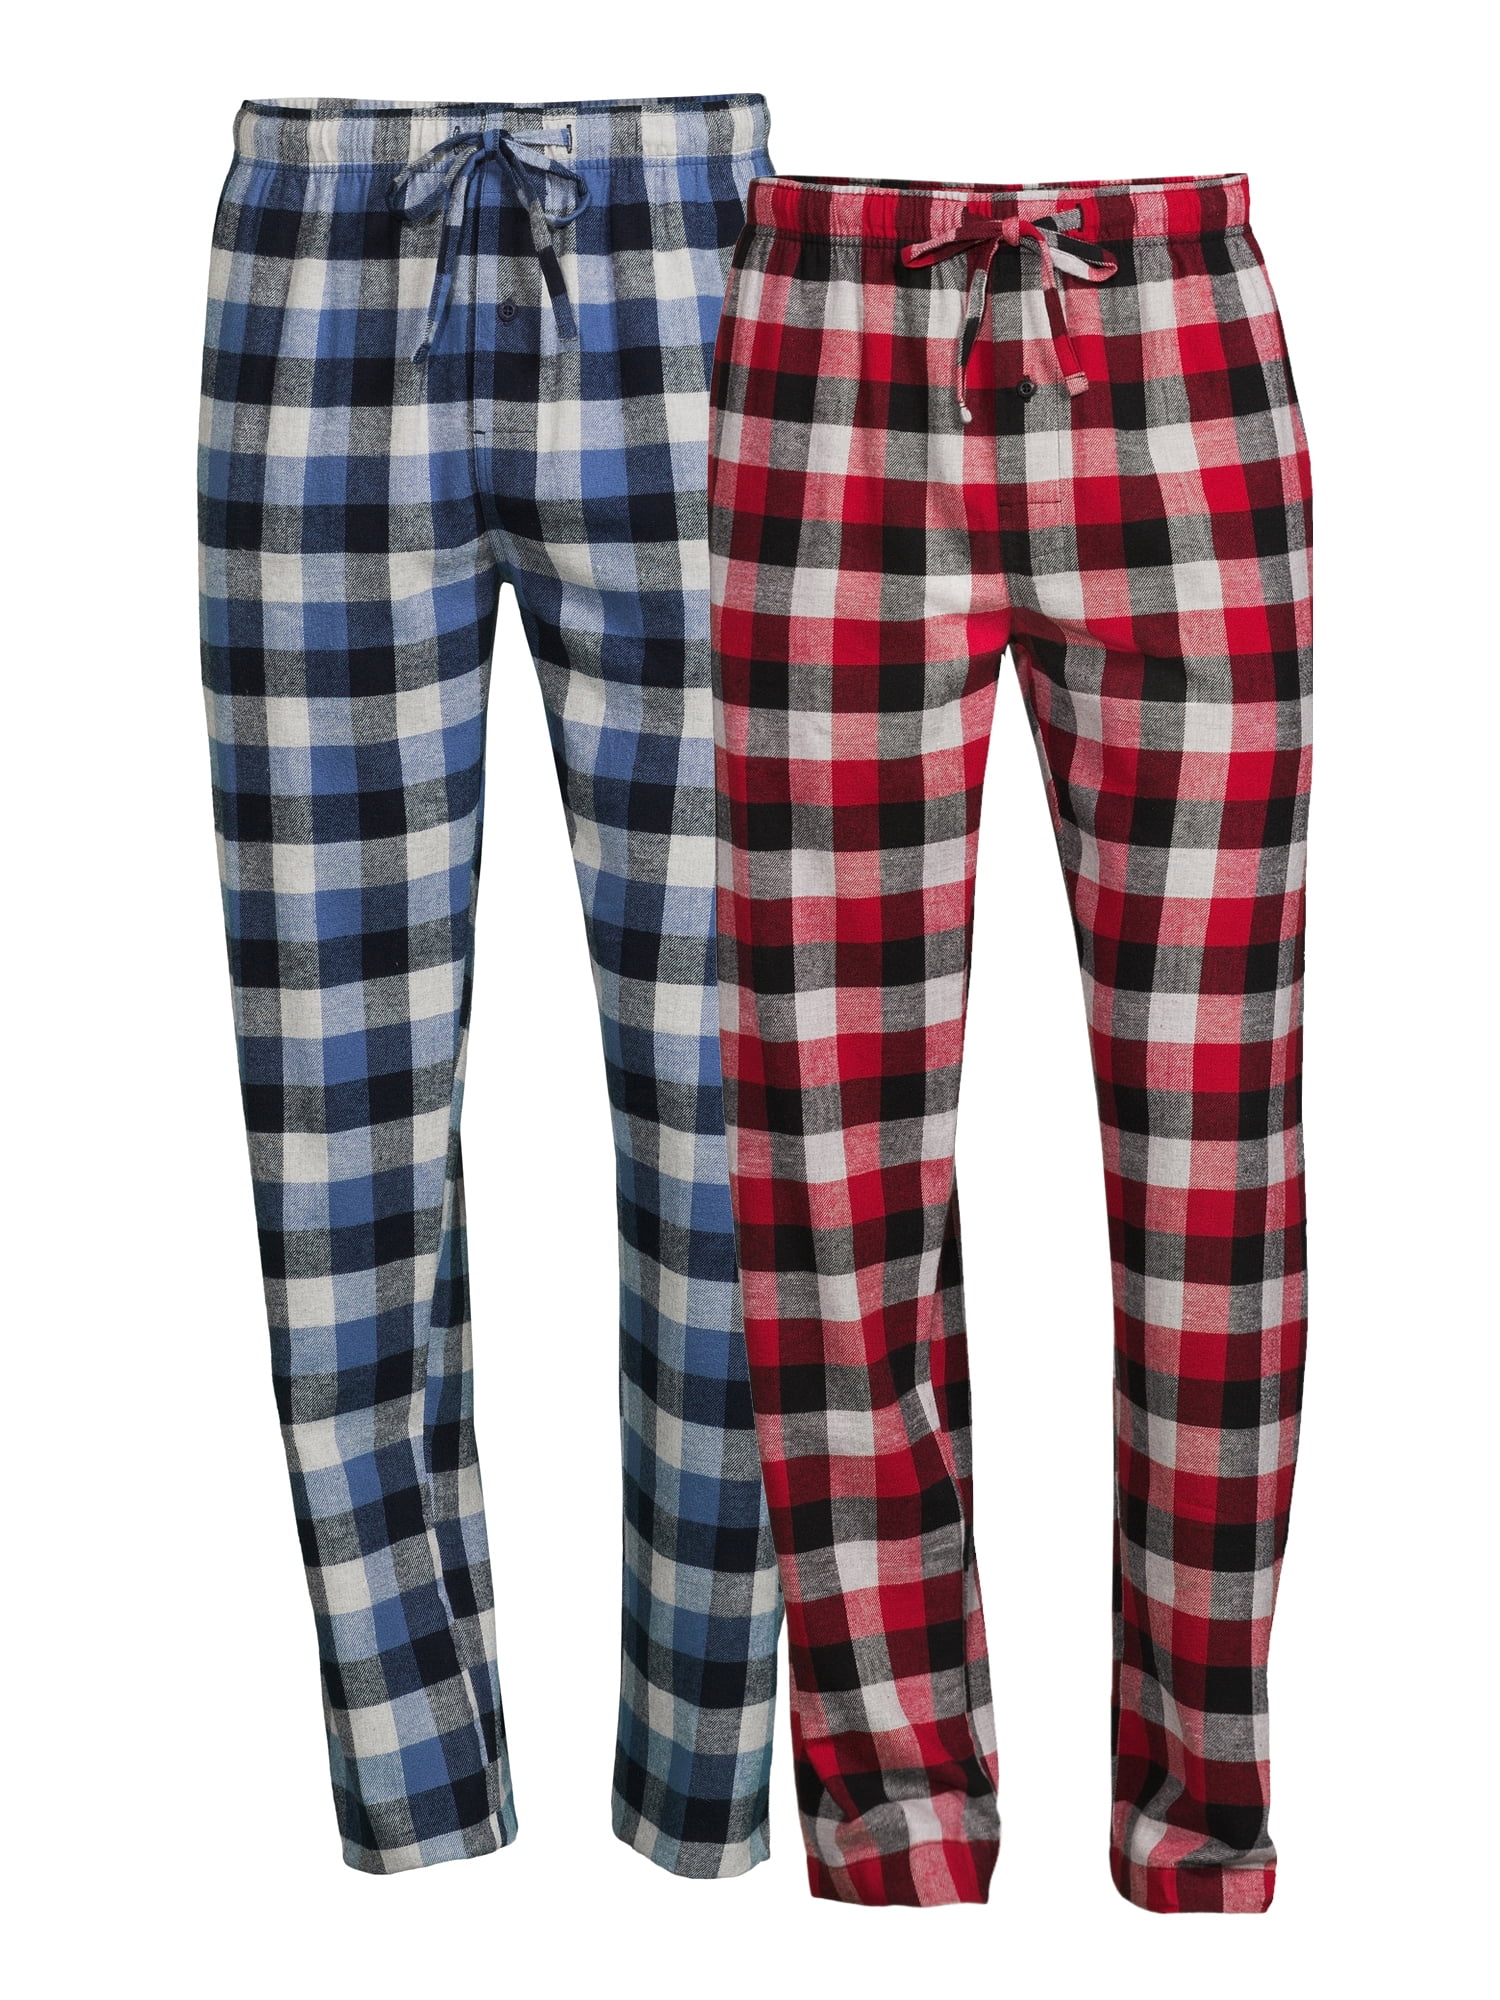 Weatherproof Mens Pajama Sleep Set Small Lounge Pants Night Shirt Top Cotton New 